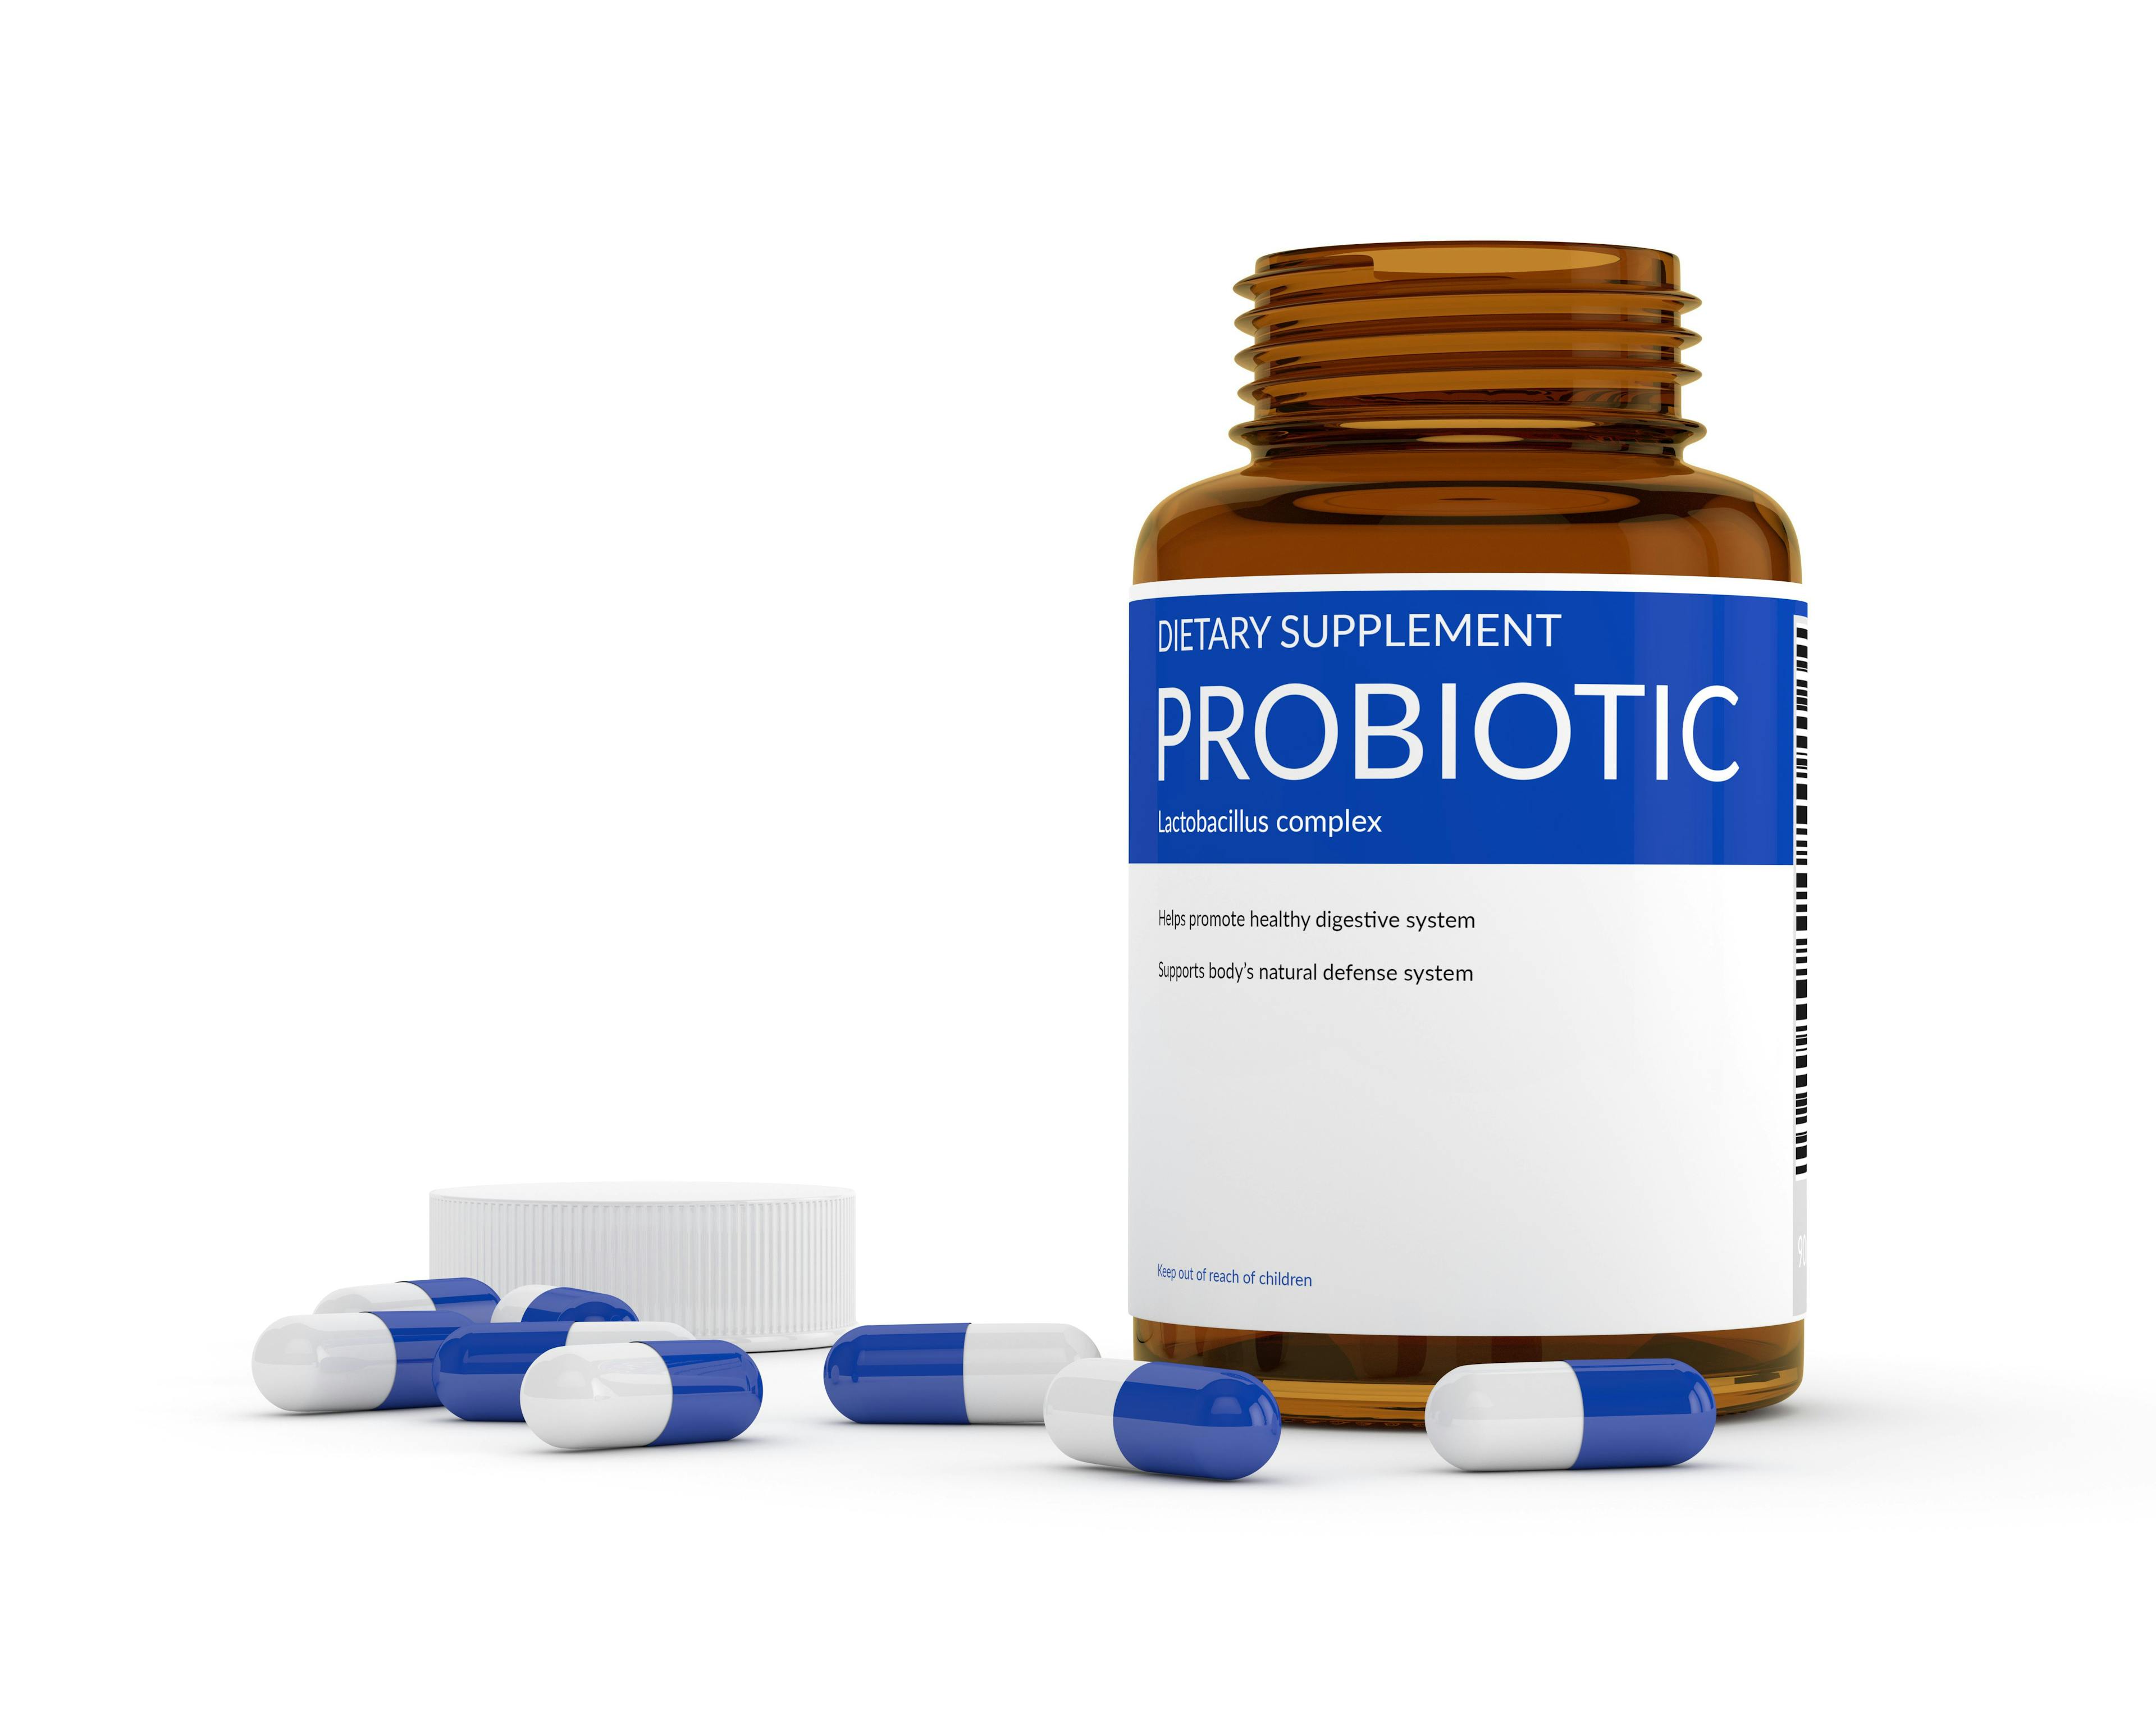 Probiotic bottle | Image credit: Aleksandra Gigowska - stock.adobe.com